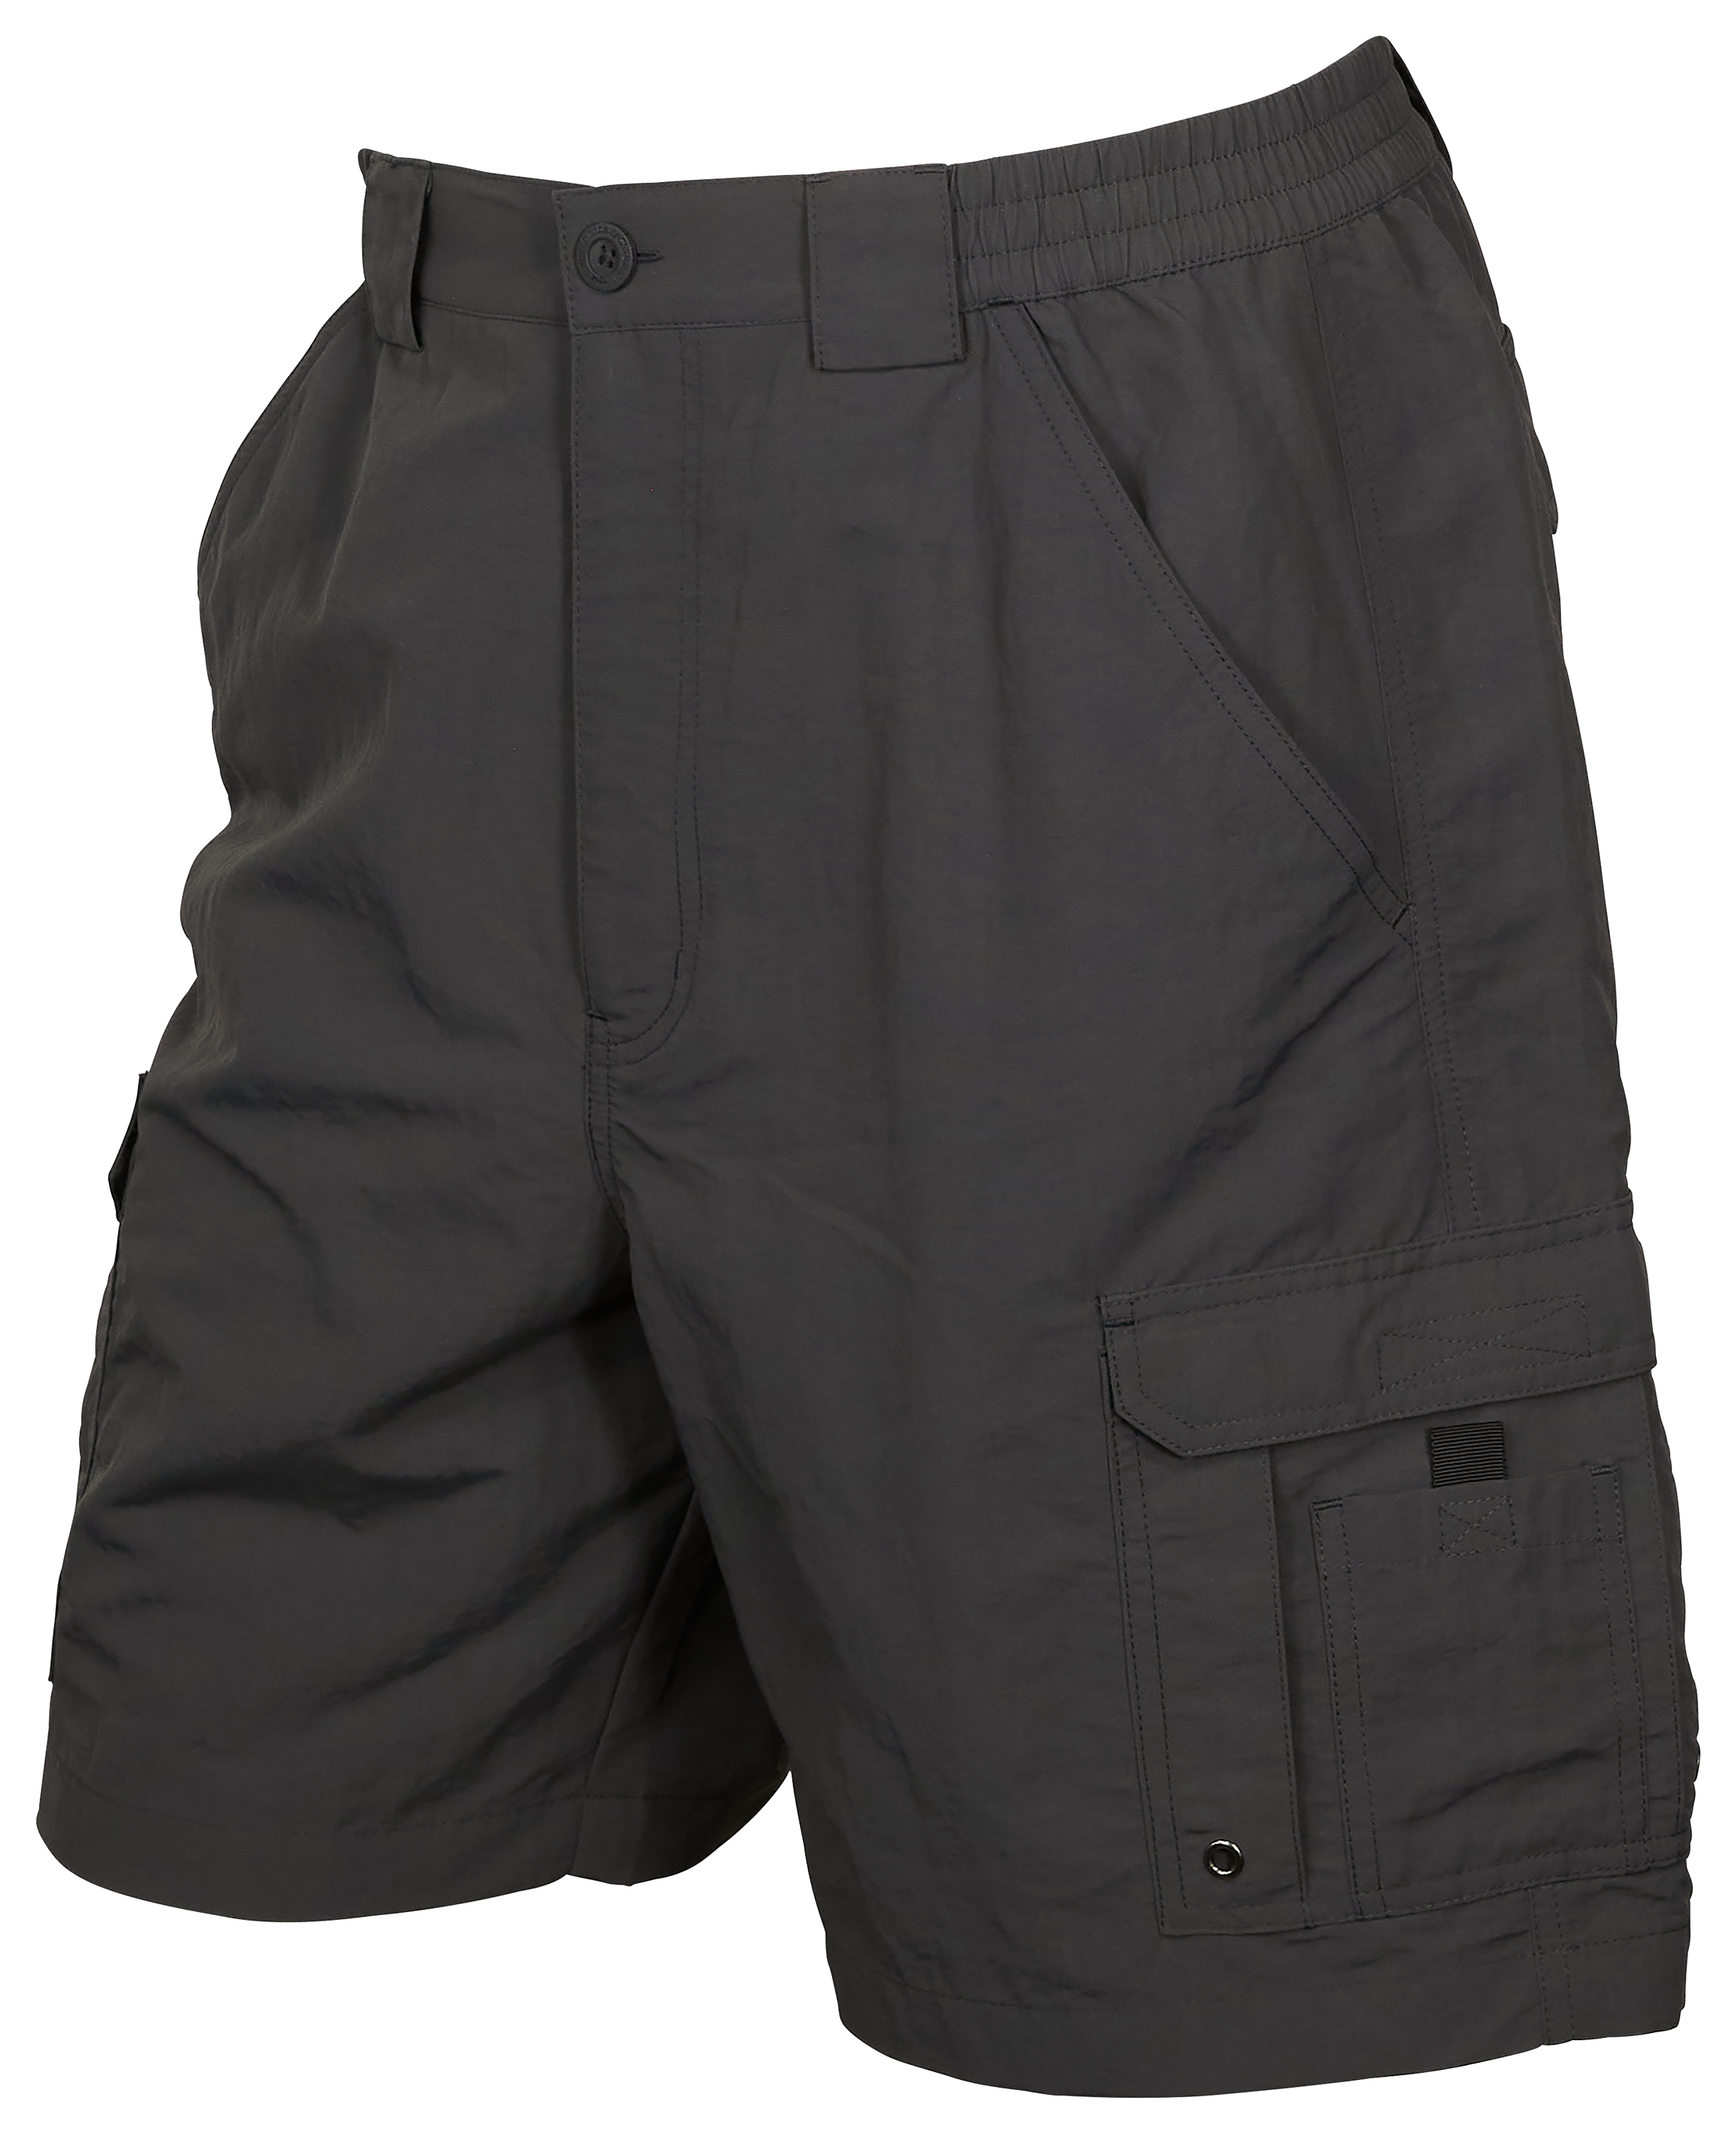 Pelagic Mako Hybrid Fishing Shorts for Men